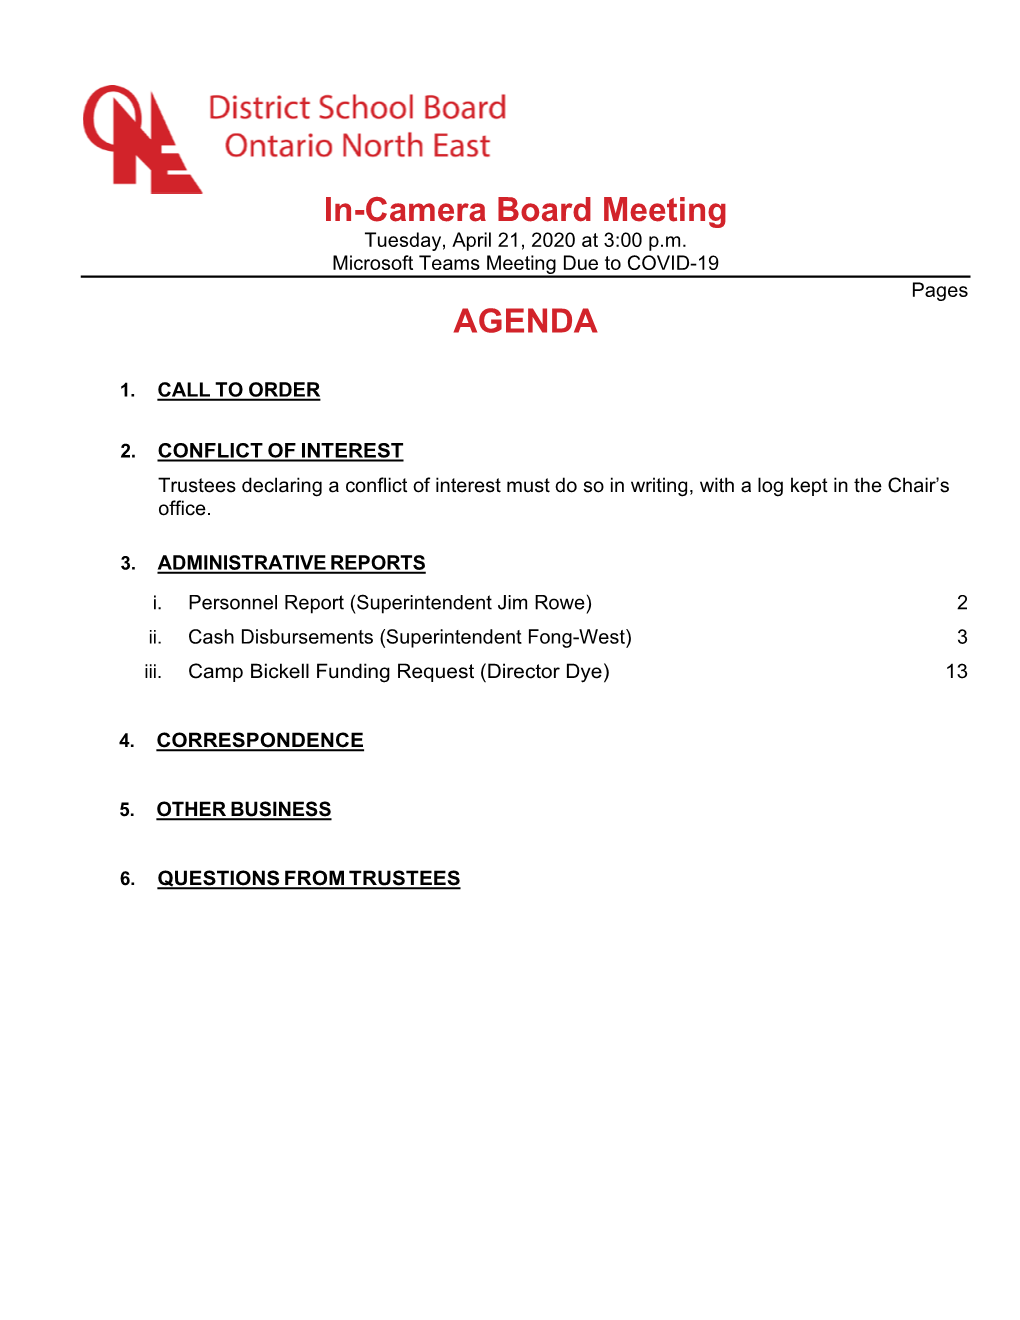 In-Camera Board Meeting AGENDA